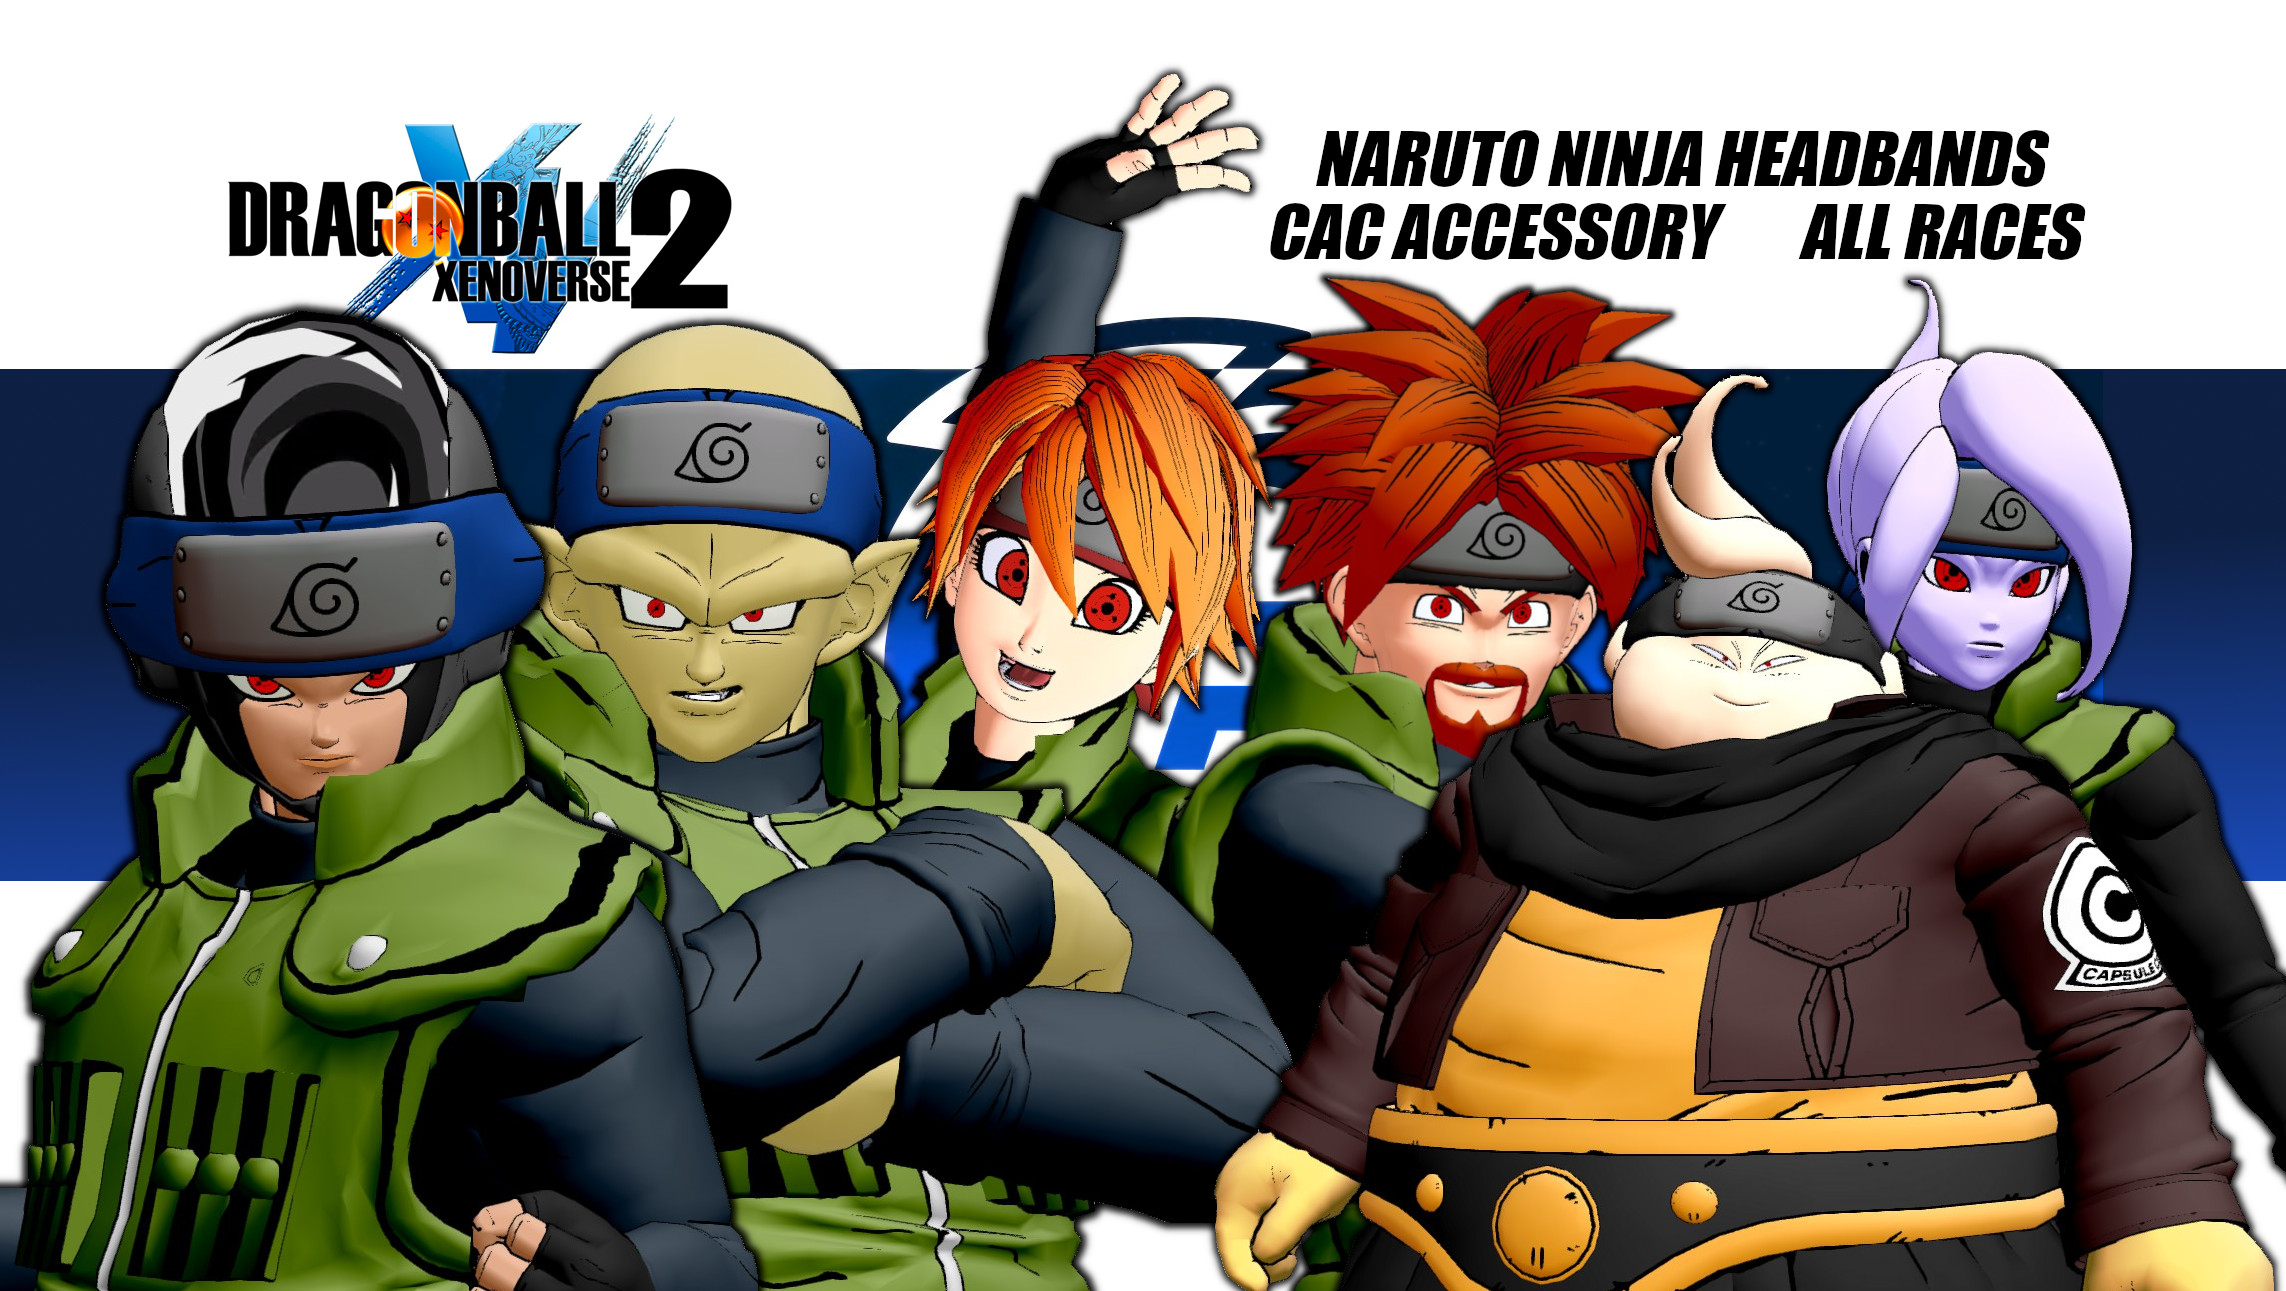 Naruto Ninja Headbands (All Races)